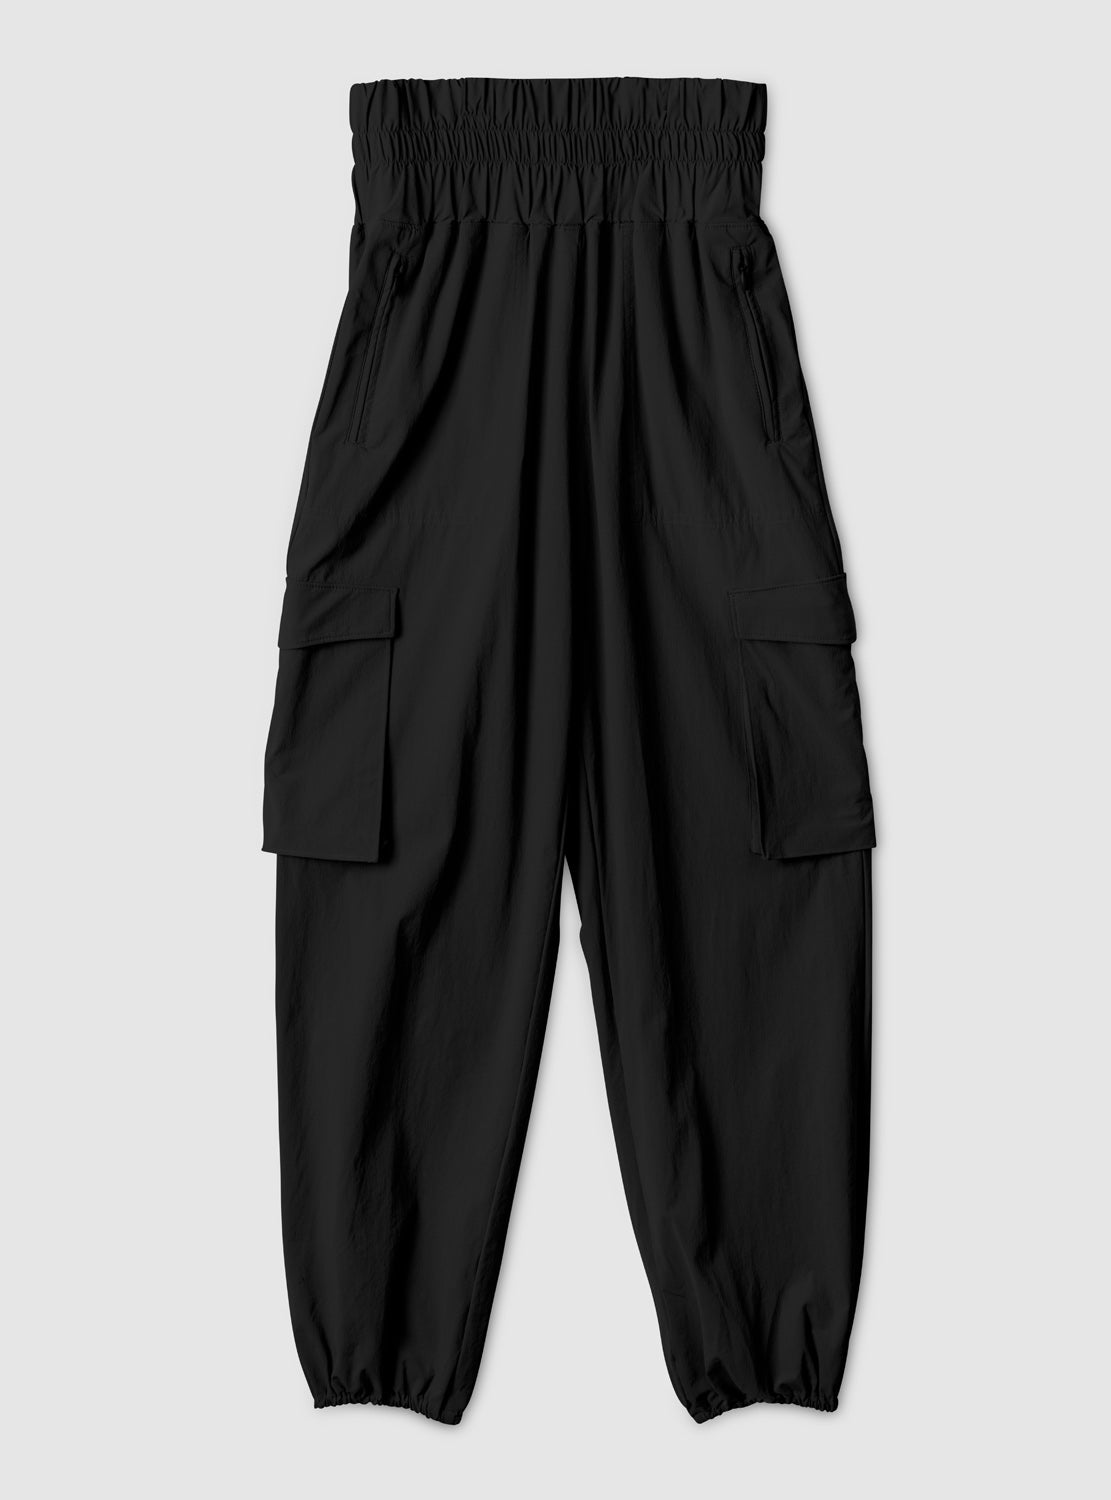 betty designs BDlab sportswear apparel for women cargo pants